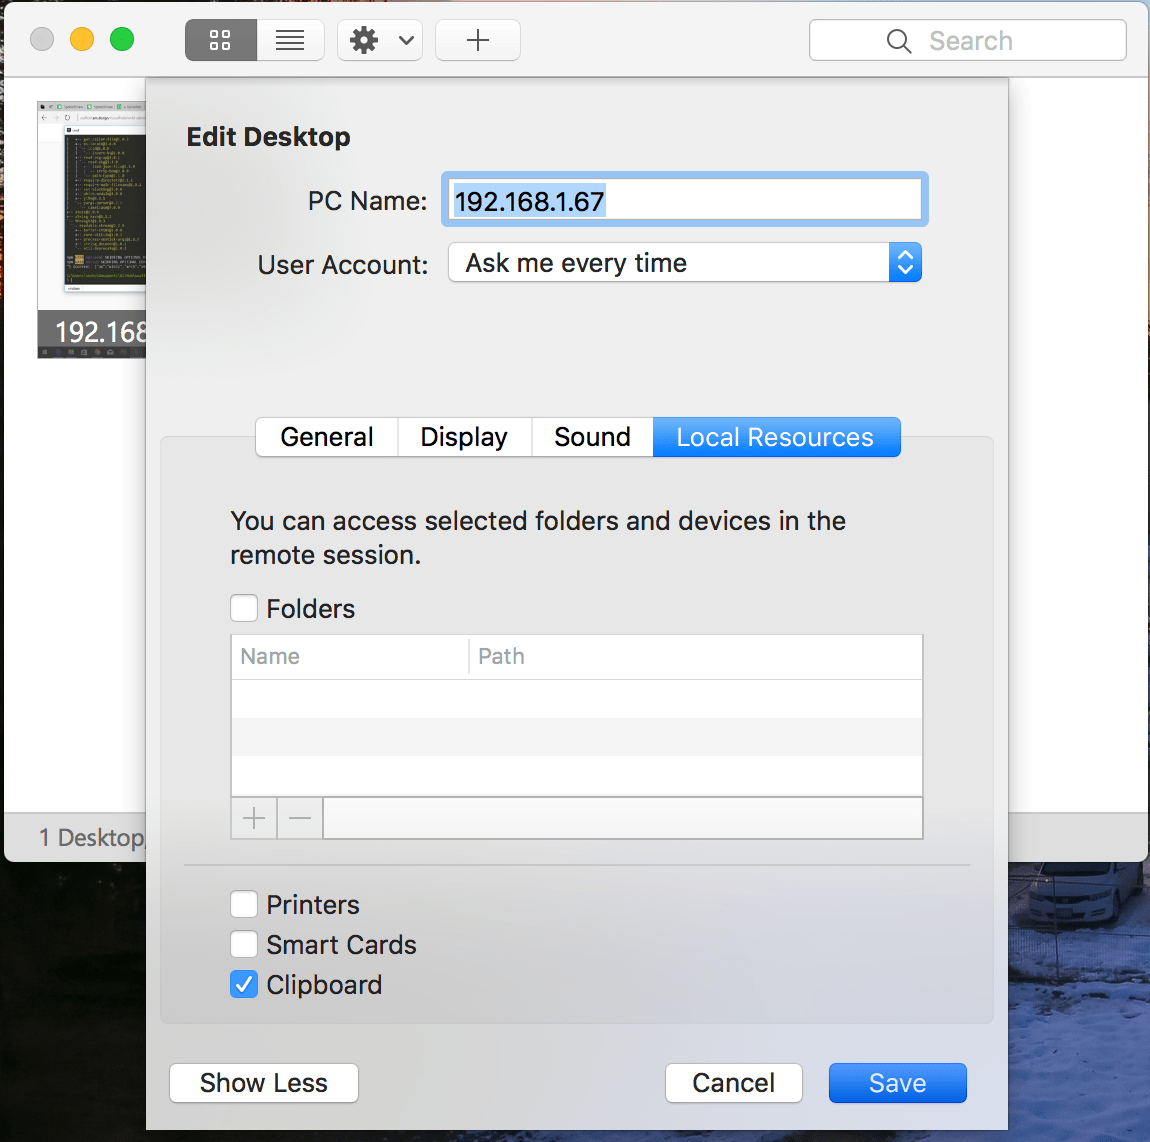 remmina remote desktop client mac